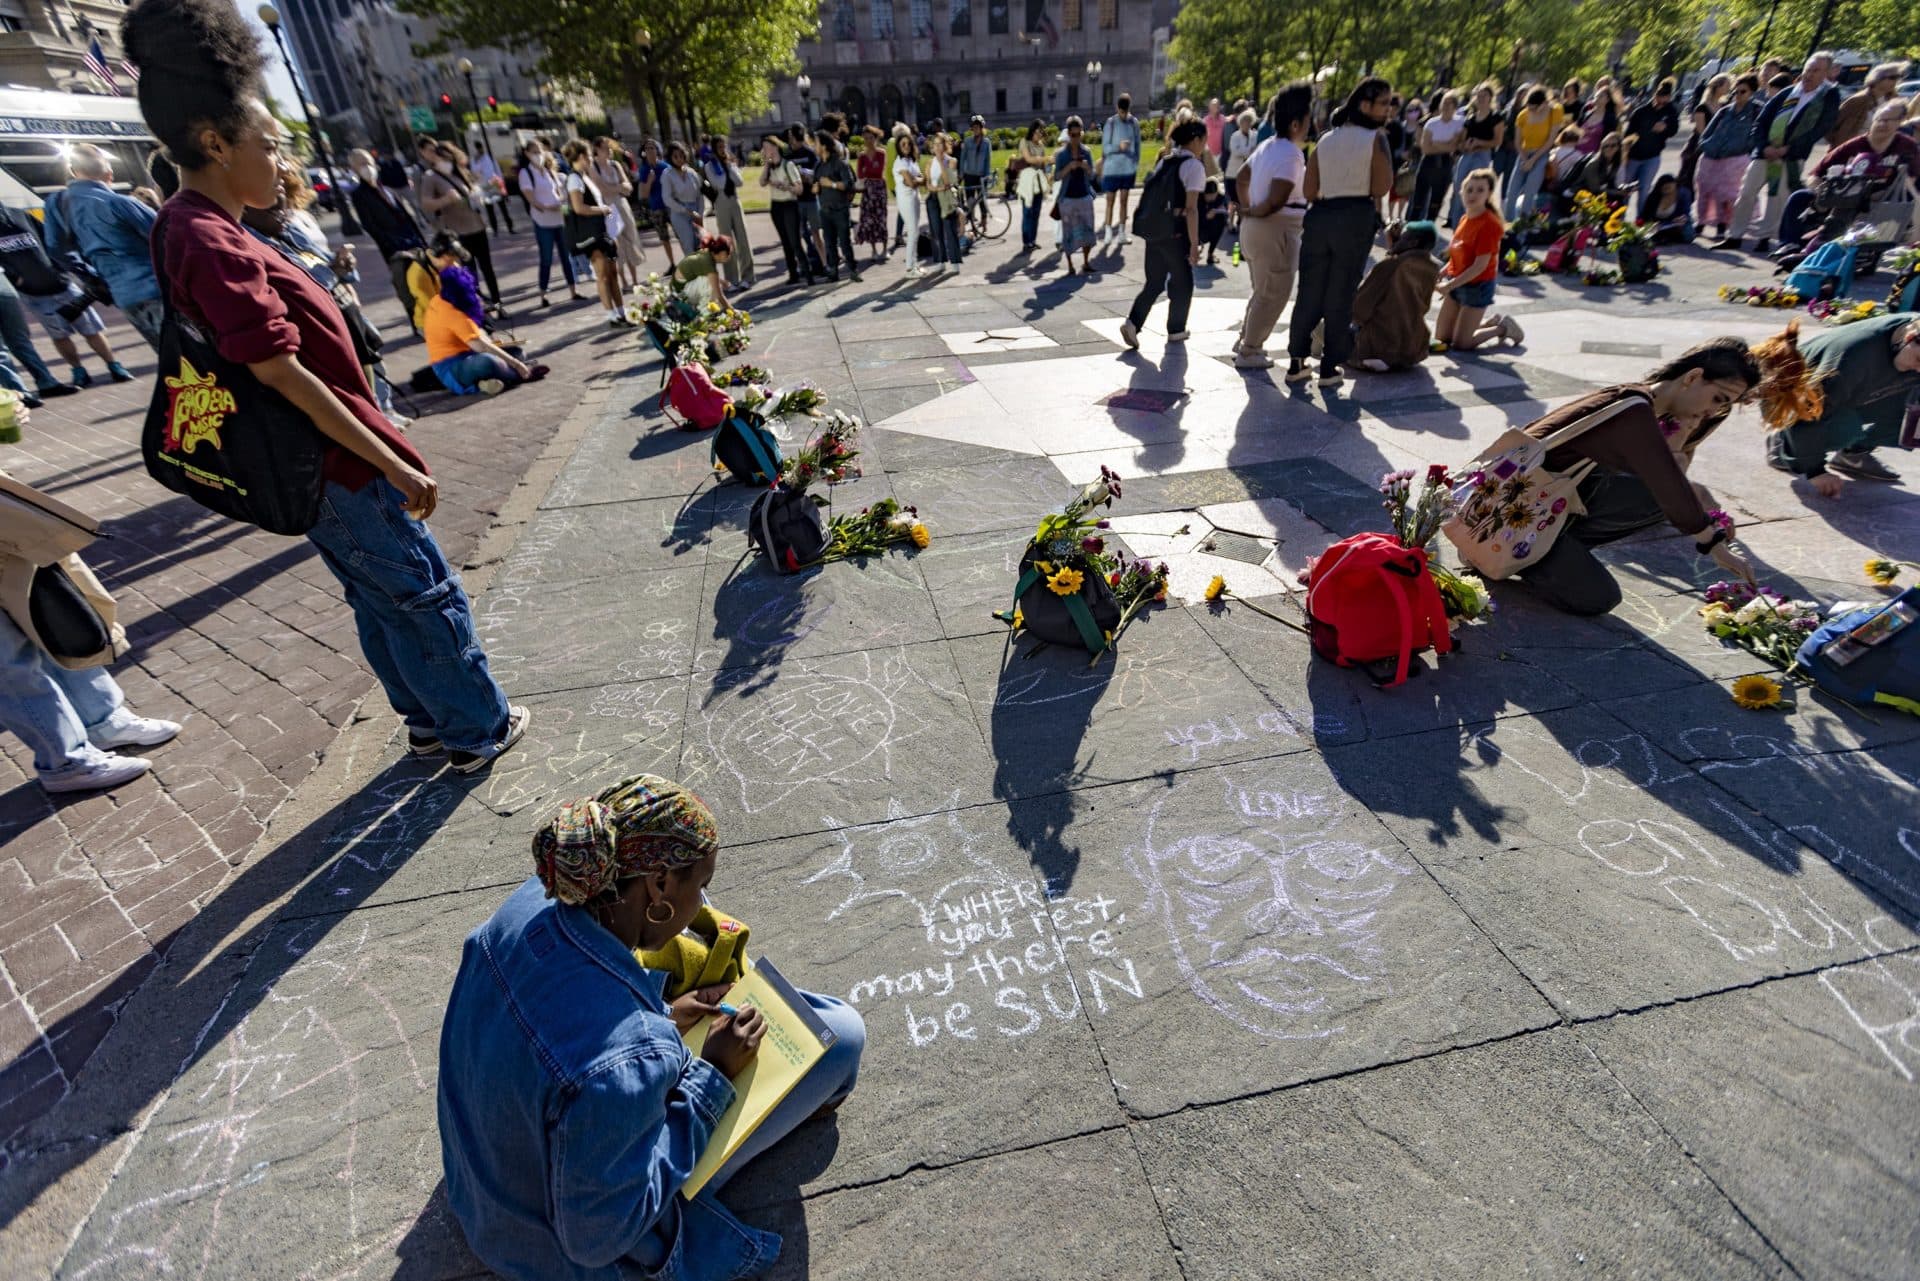 The scene at Copley Square Plaza during the memorial. (Jesse Costa/WBUR)